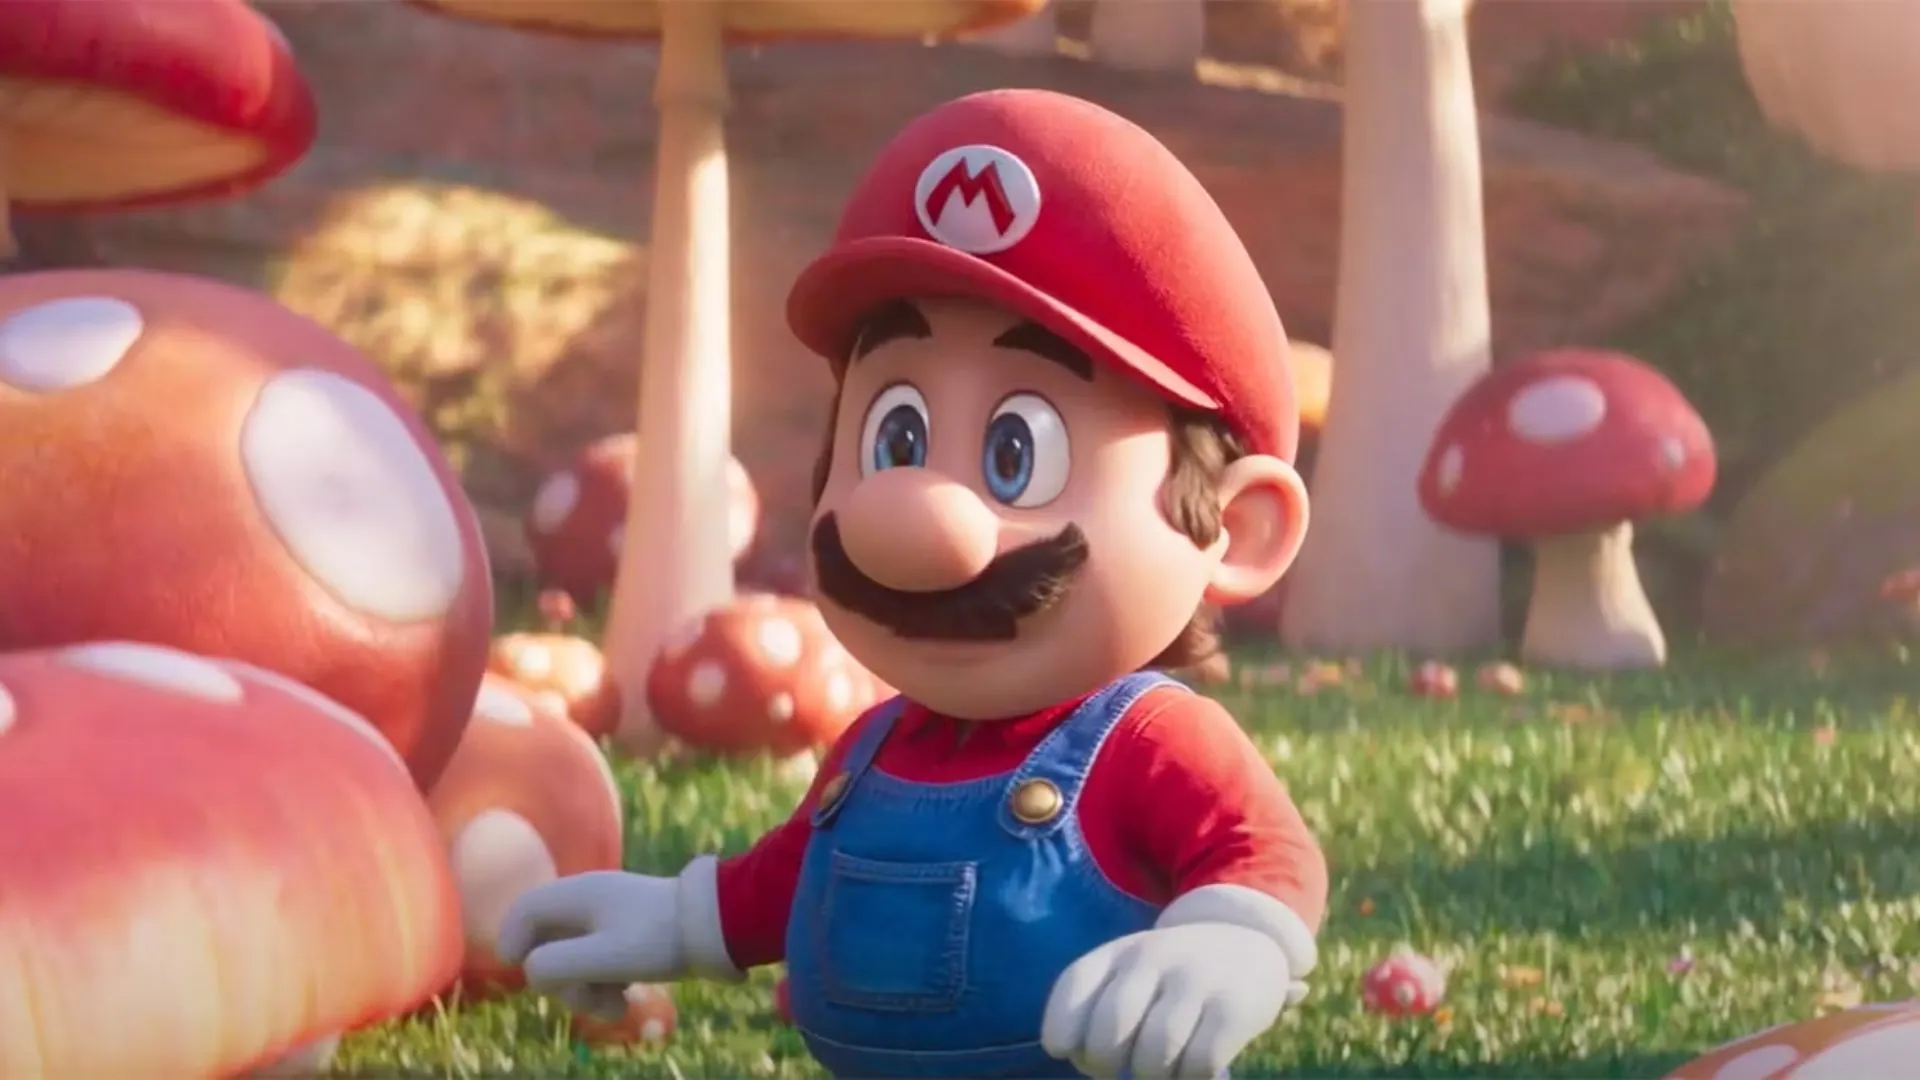 Nintendo’s Super Mario Animated Film Adaptation Titled ‘The Super Mario Bros. Movie’